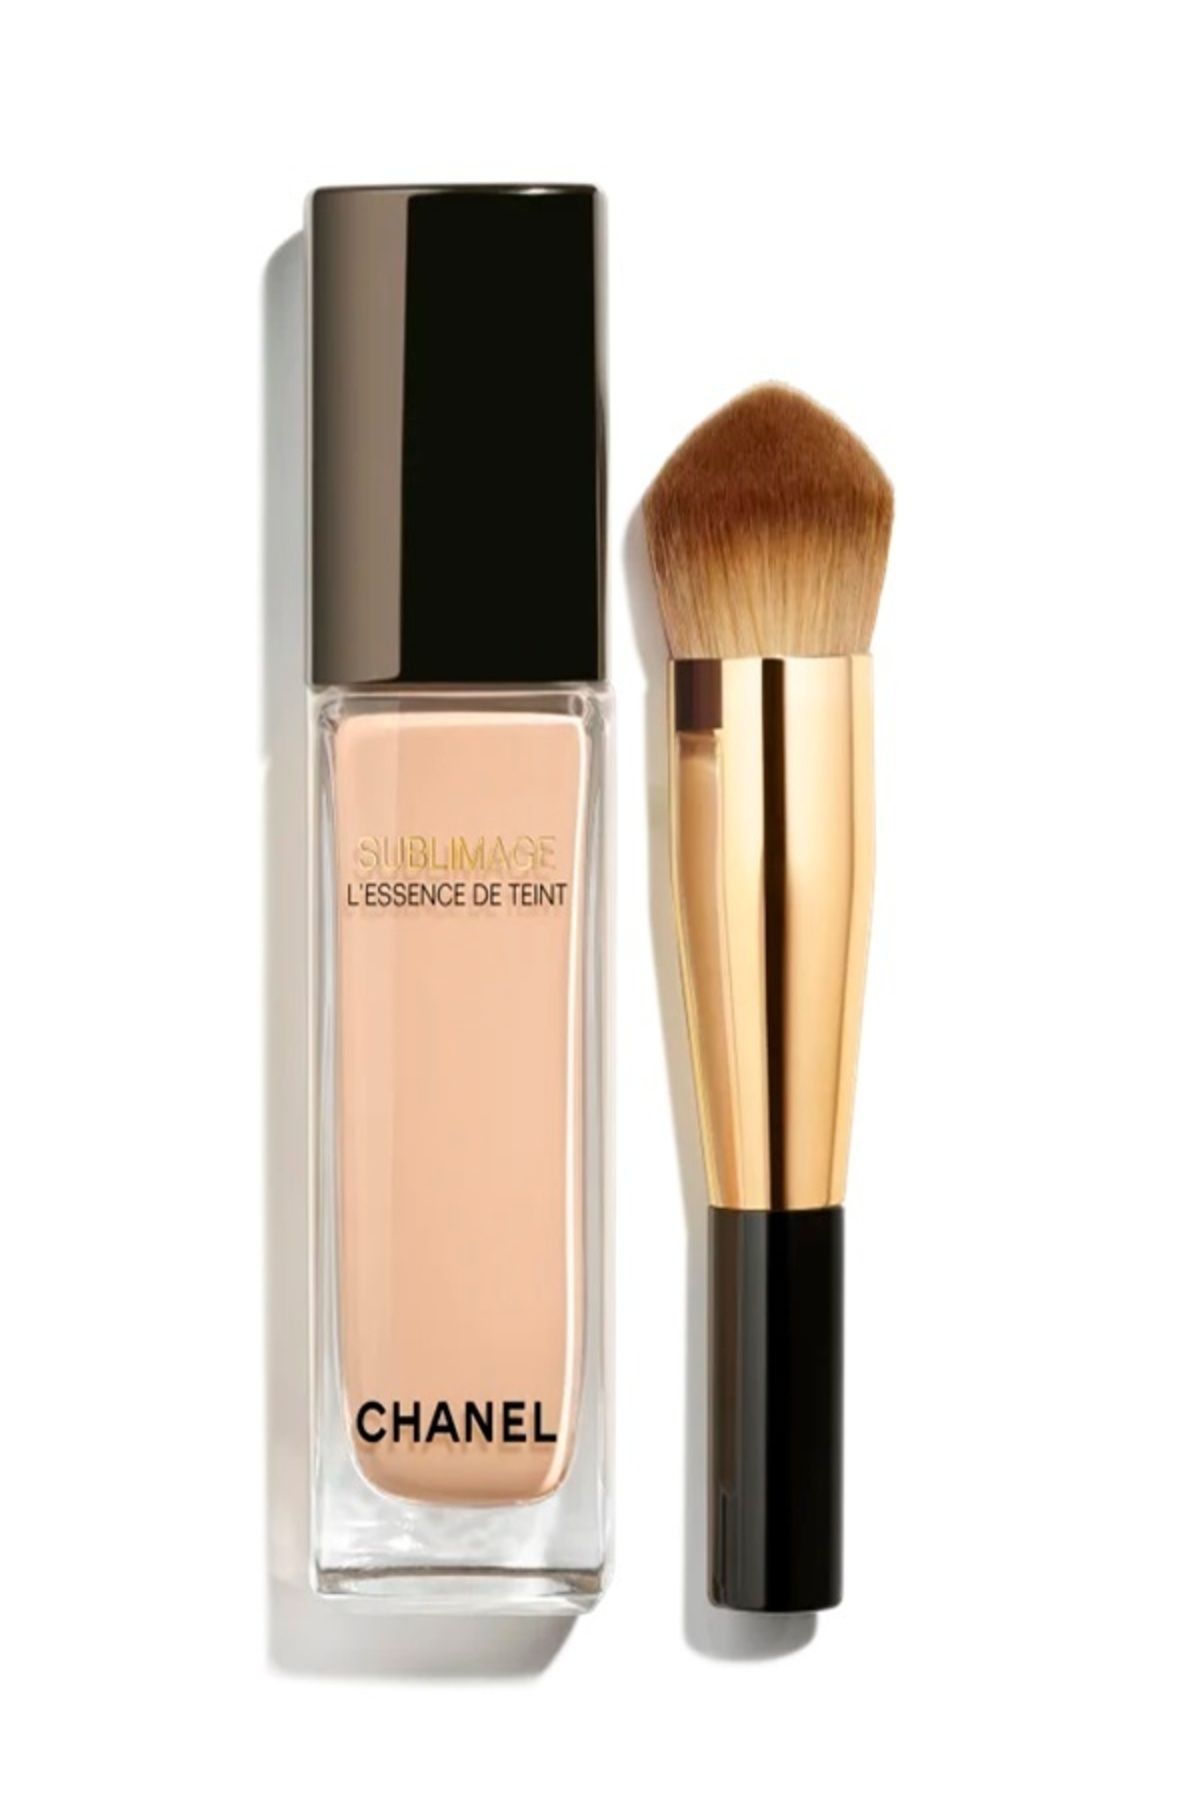 Chanel سرم مرطوب کننده کرم پودر رنگی SUBLIMAGE L'ESSENCE DE TEINT زیبایی و جذابیت بی نظیر برای پوست شما شماره B10